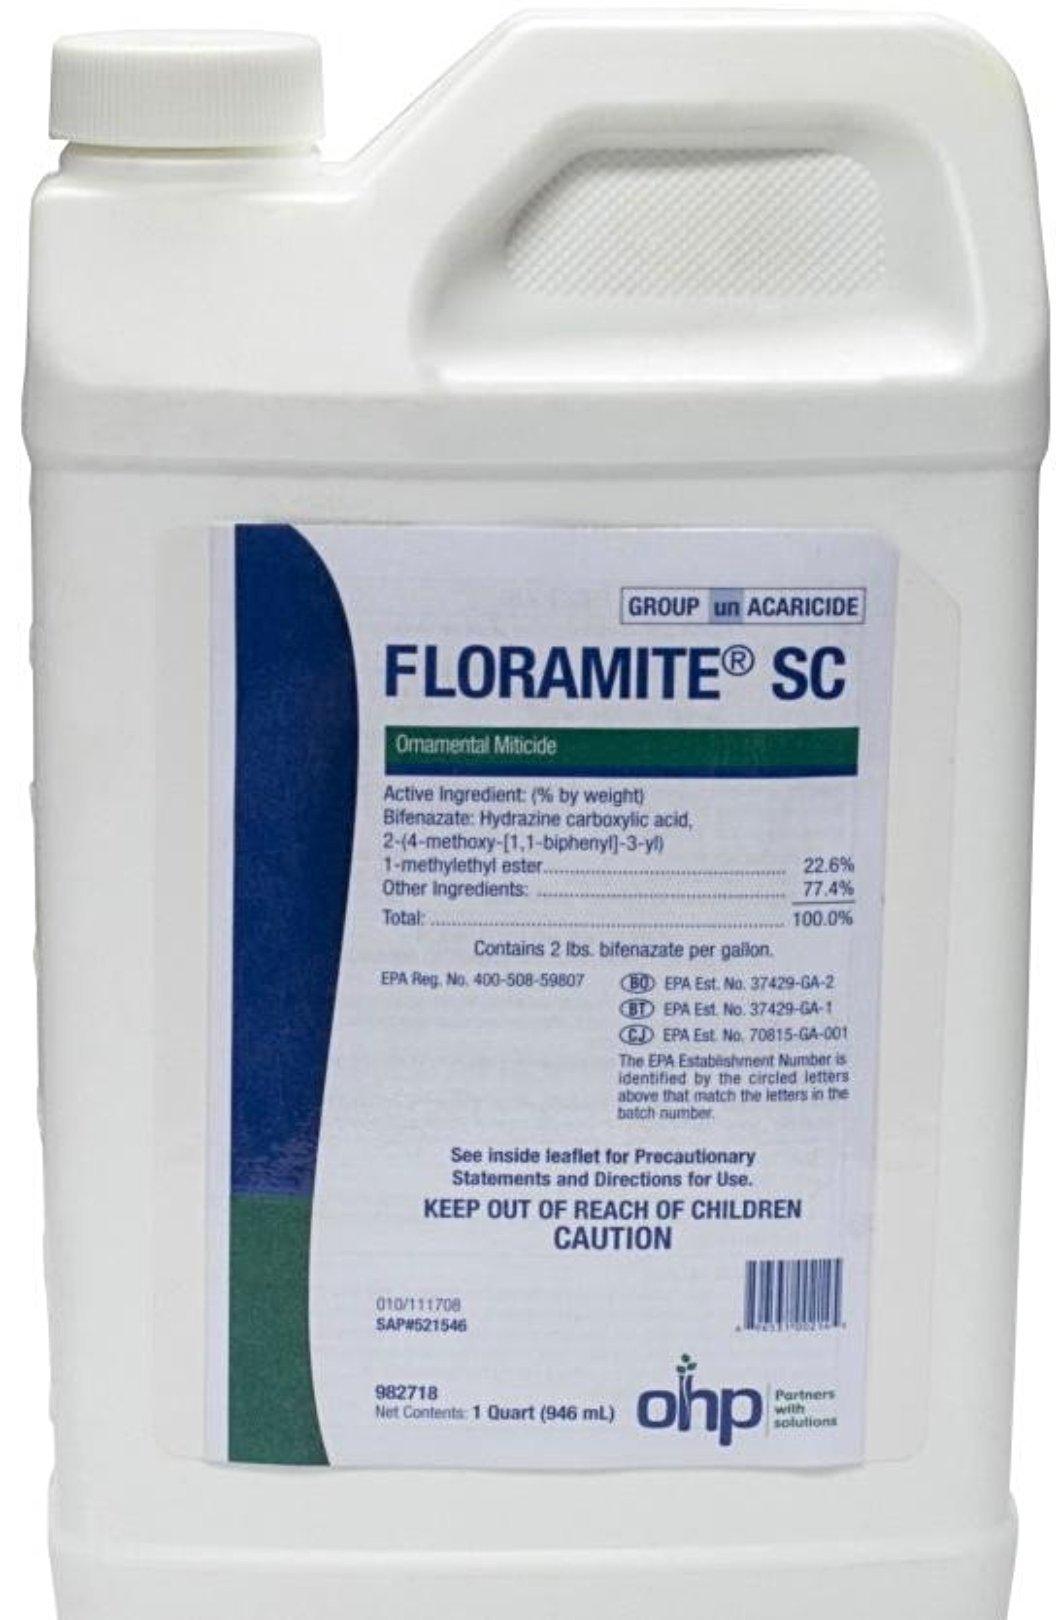 Miticide - Floramite SC Ornamental Miticide Insecticide